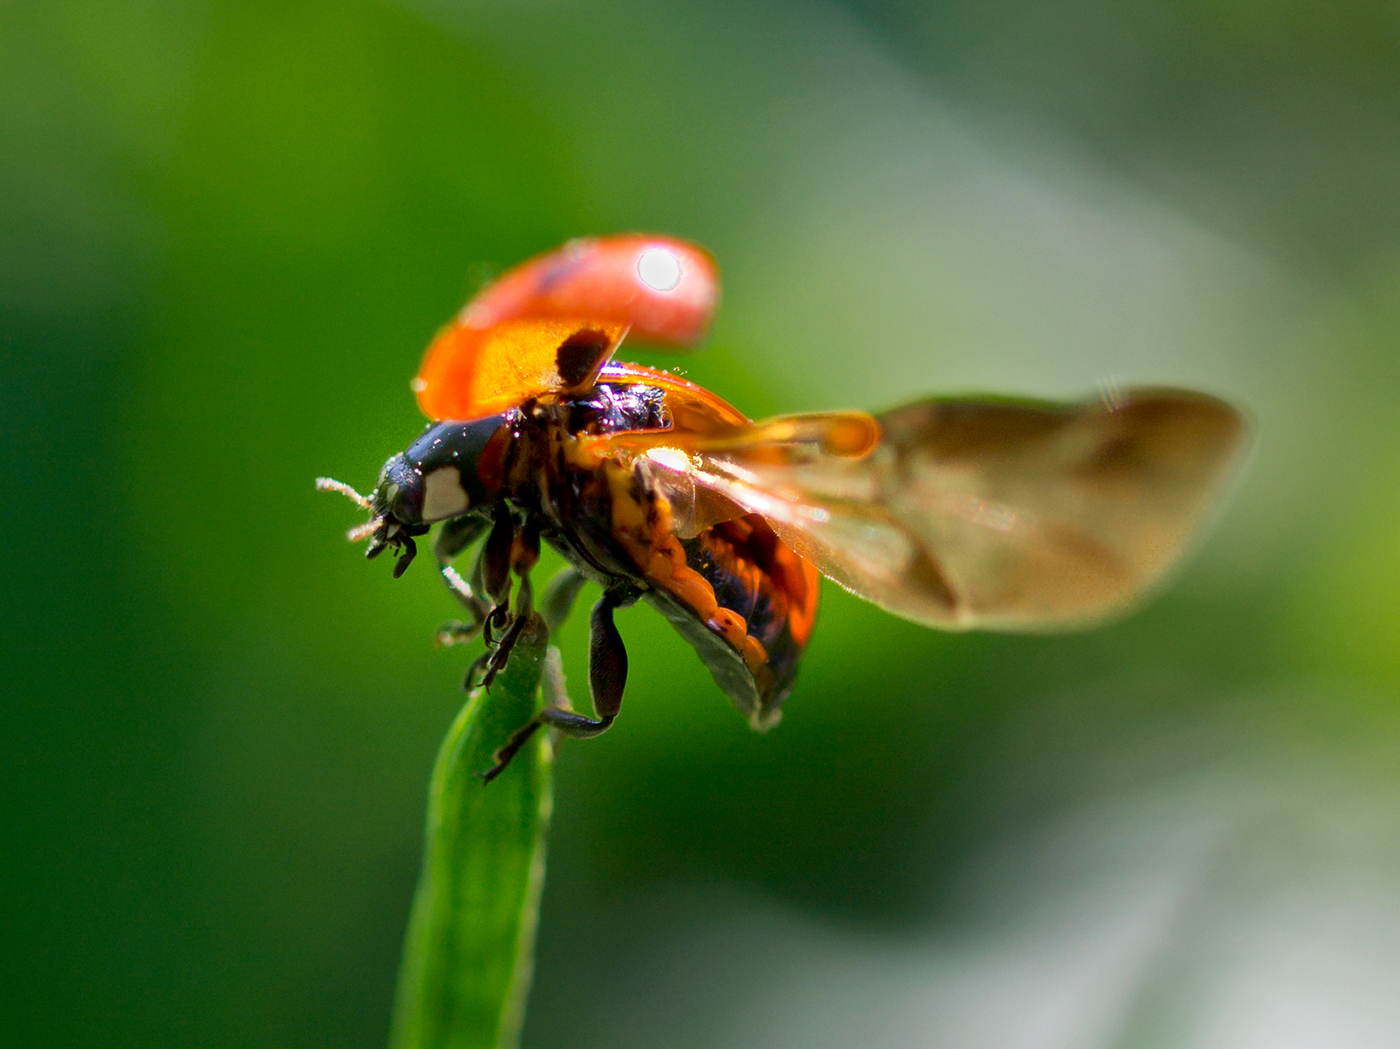 Kumbang merebak sayapnya